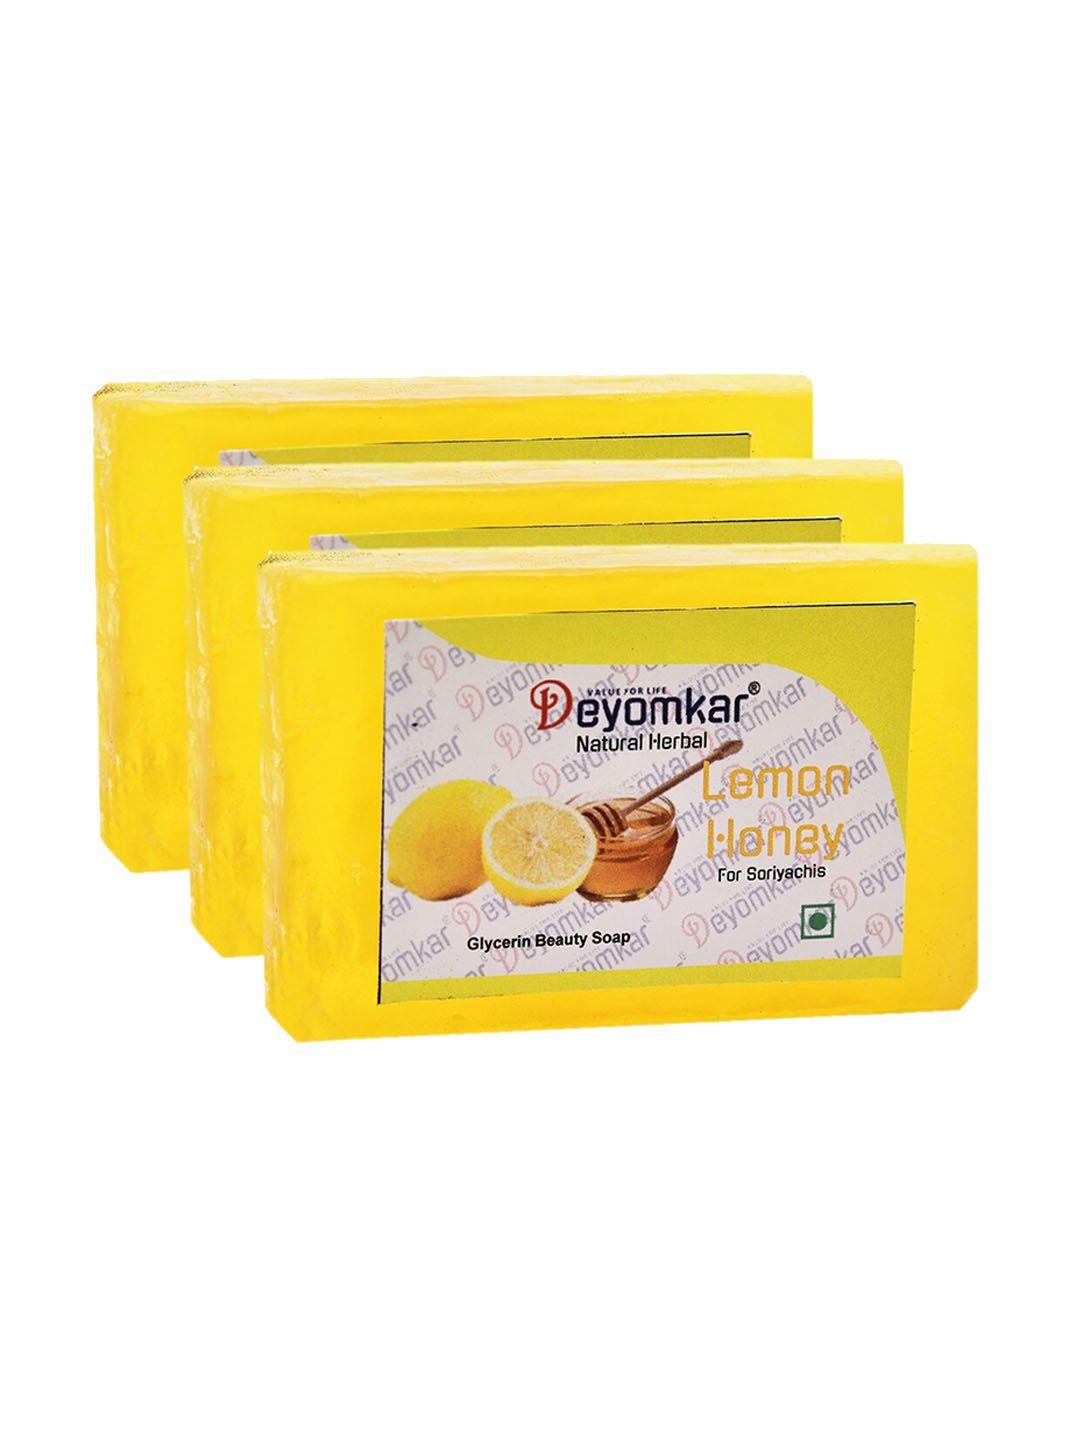 deyomkar set of 3 natural herbal lemon honey glycerin soap